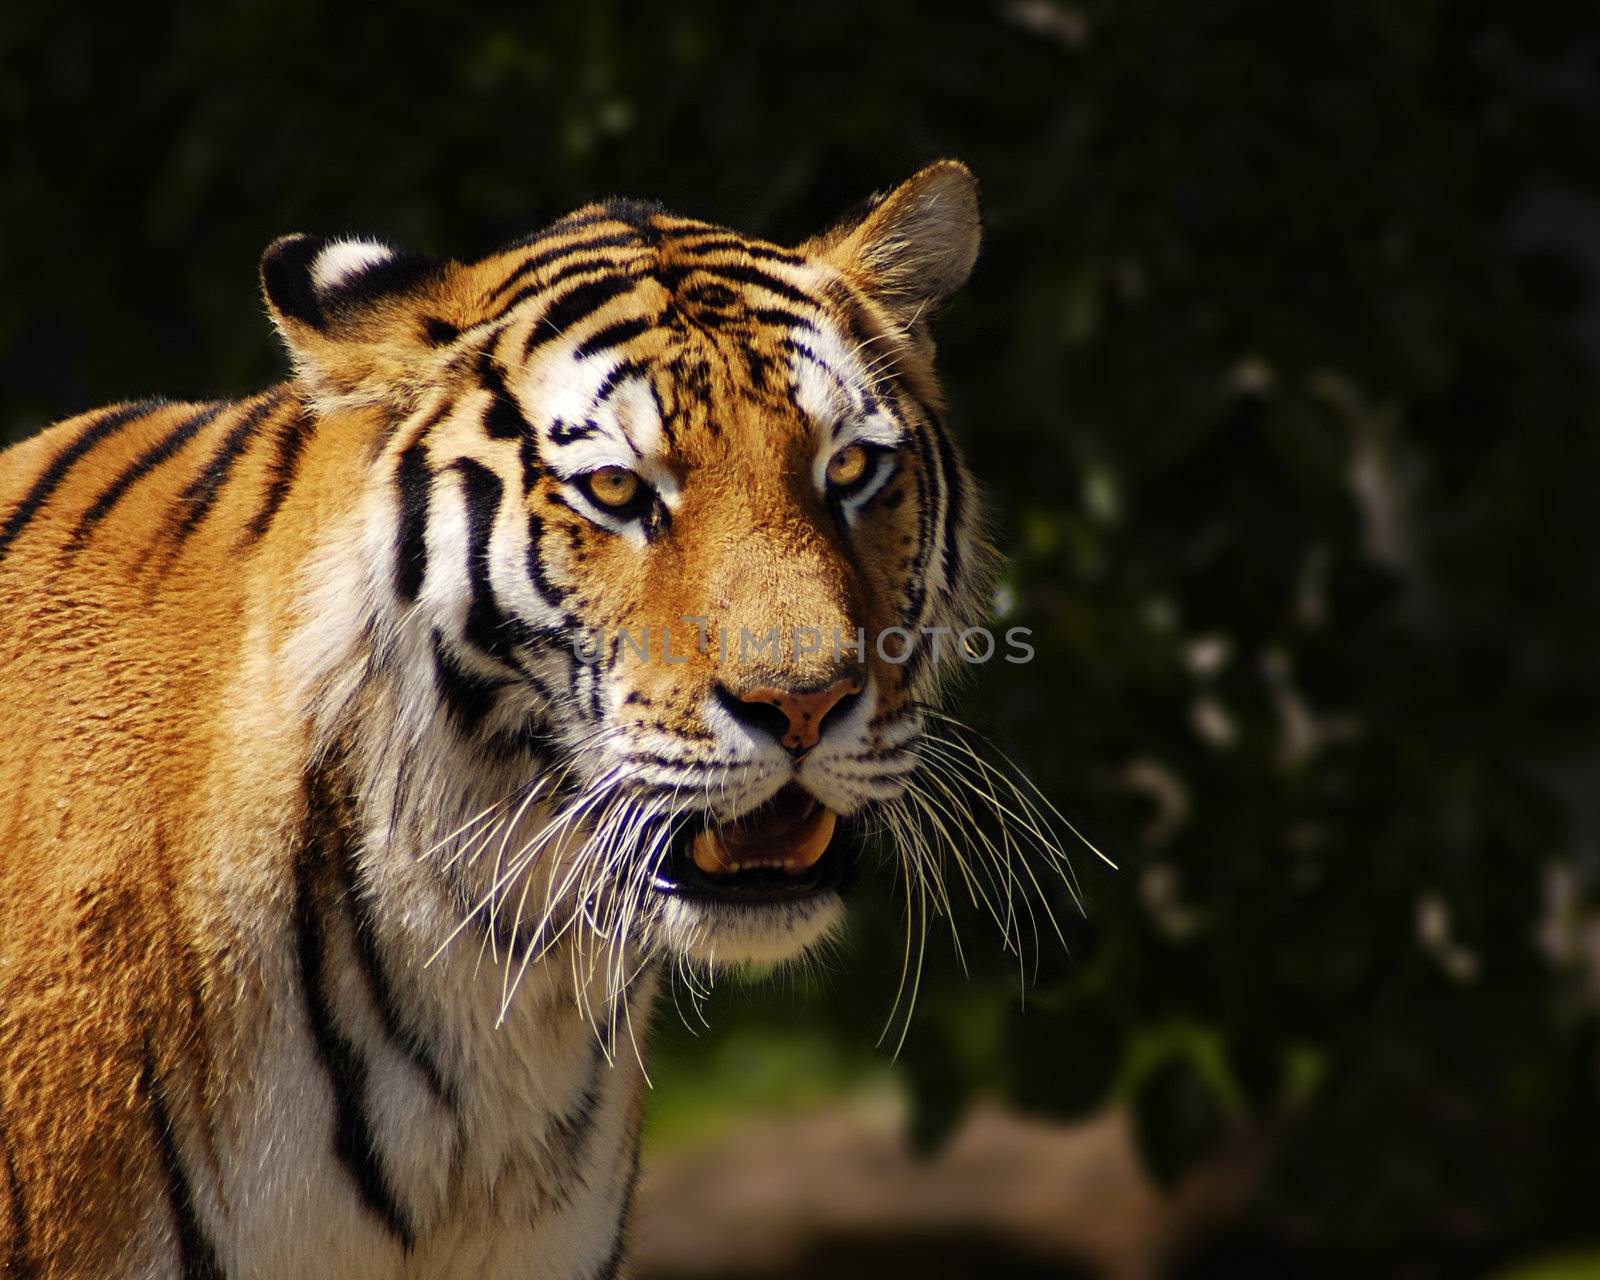 A tiger at the Detroit Zoo.